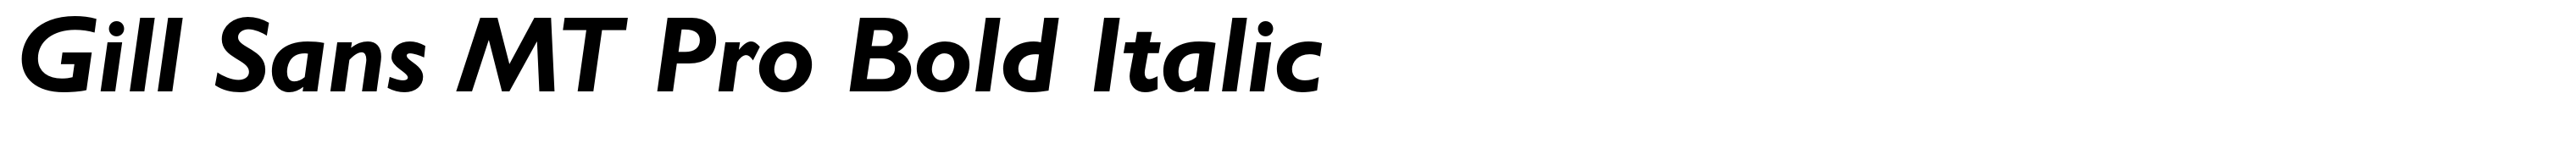 Gill Sans MT Pro Bold Italic